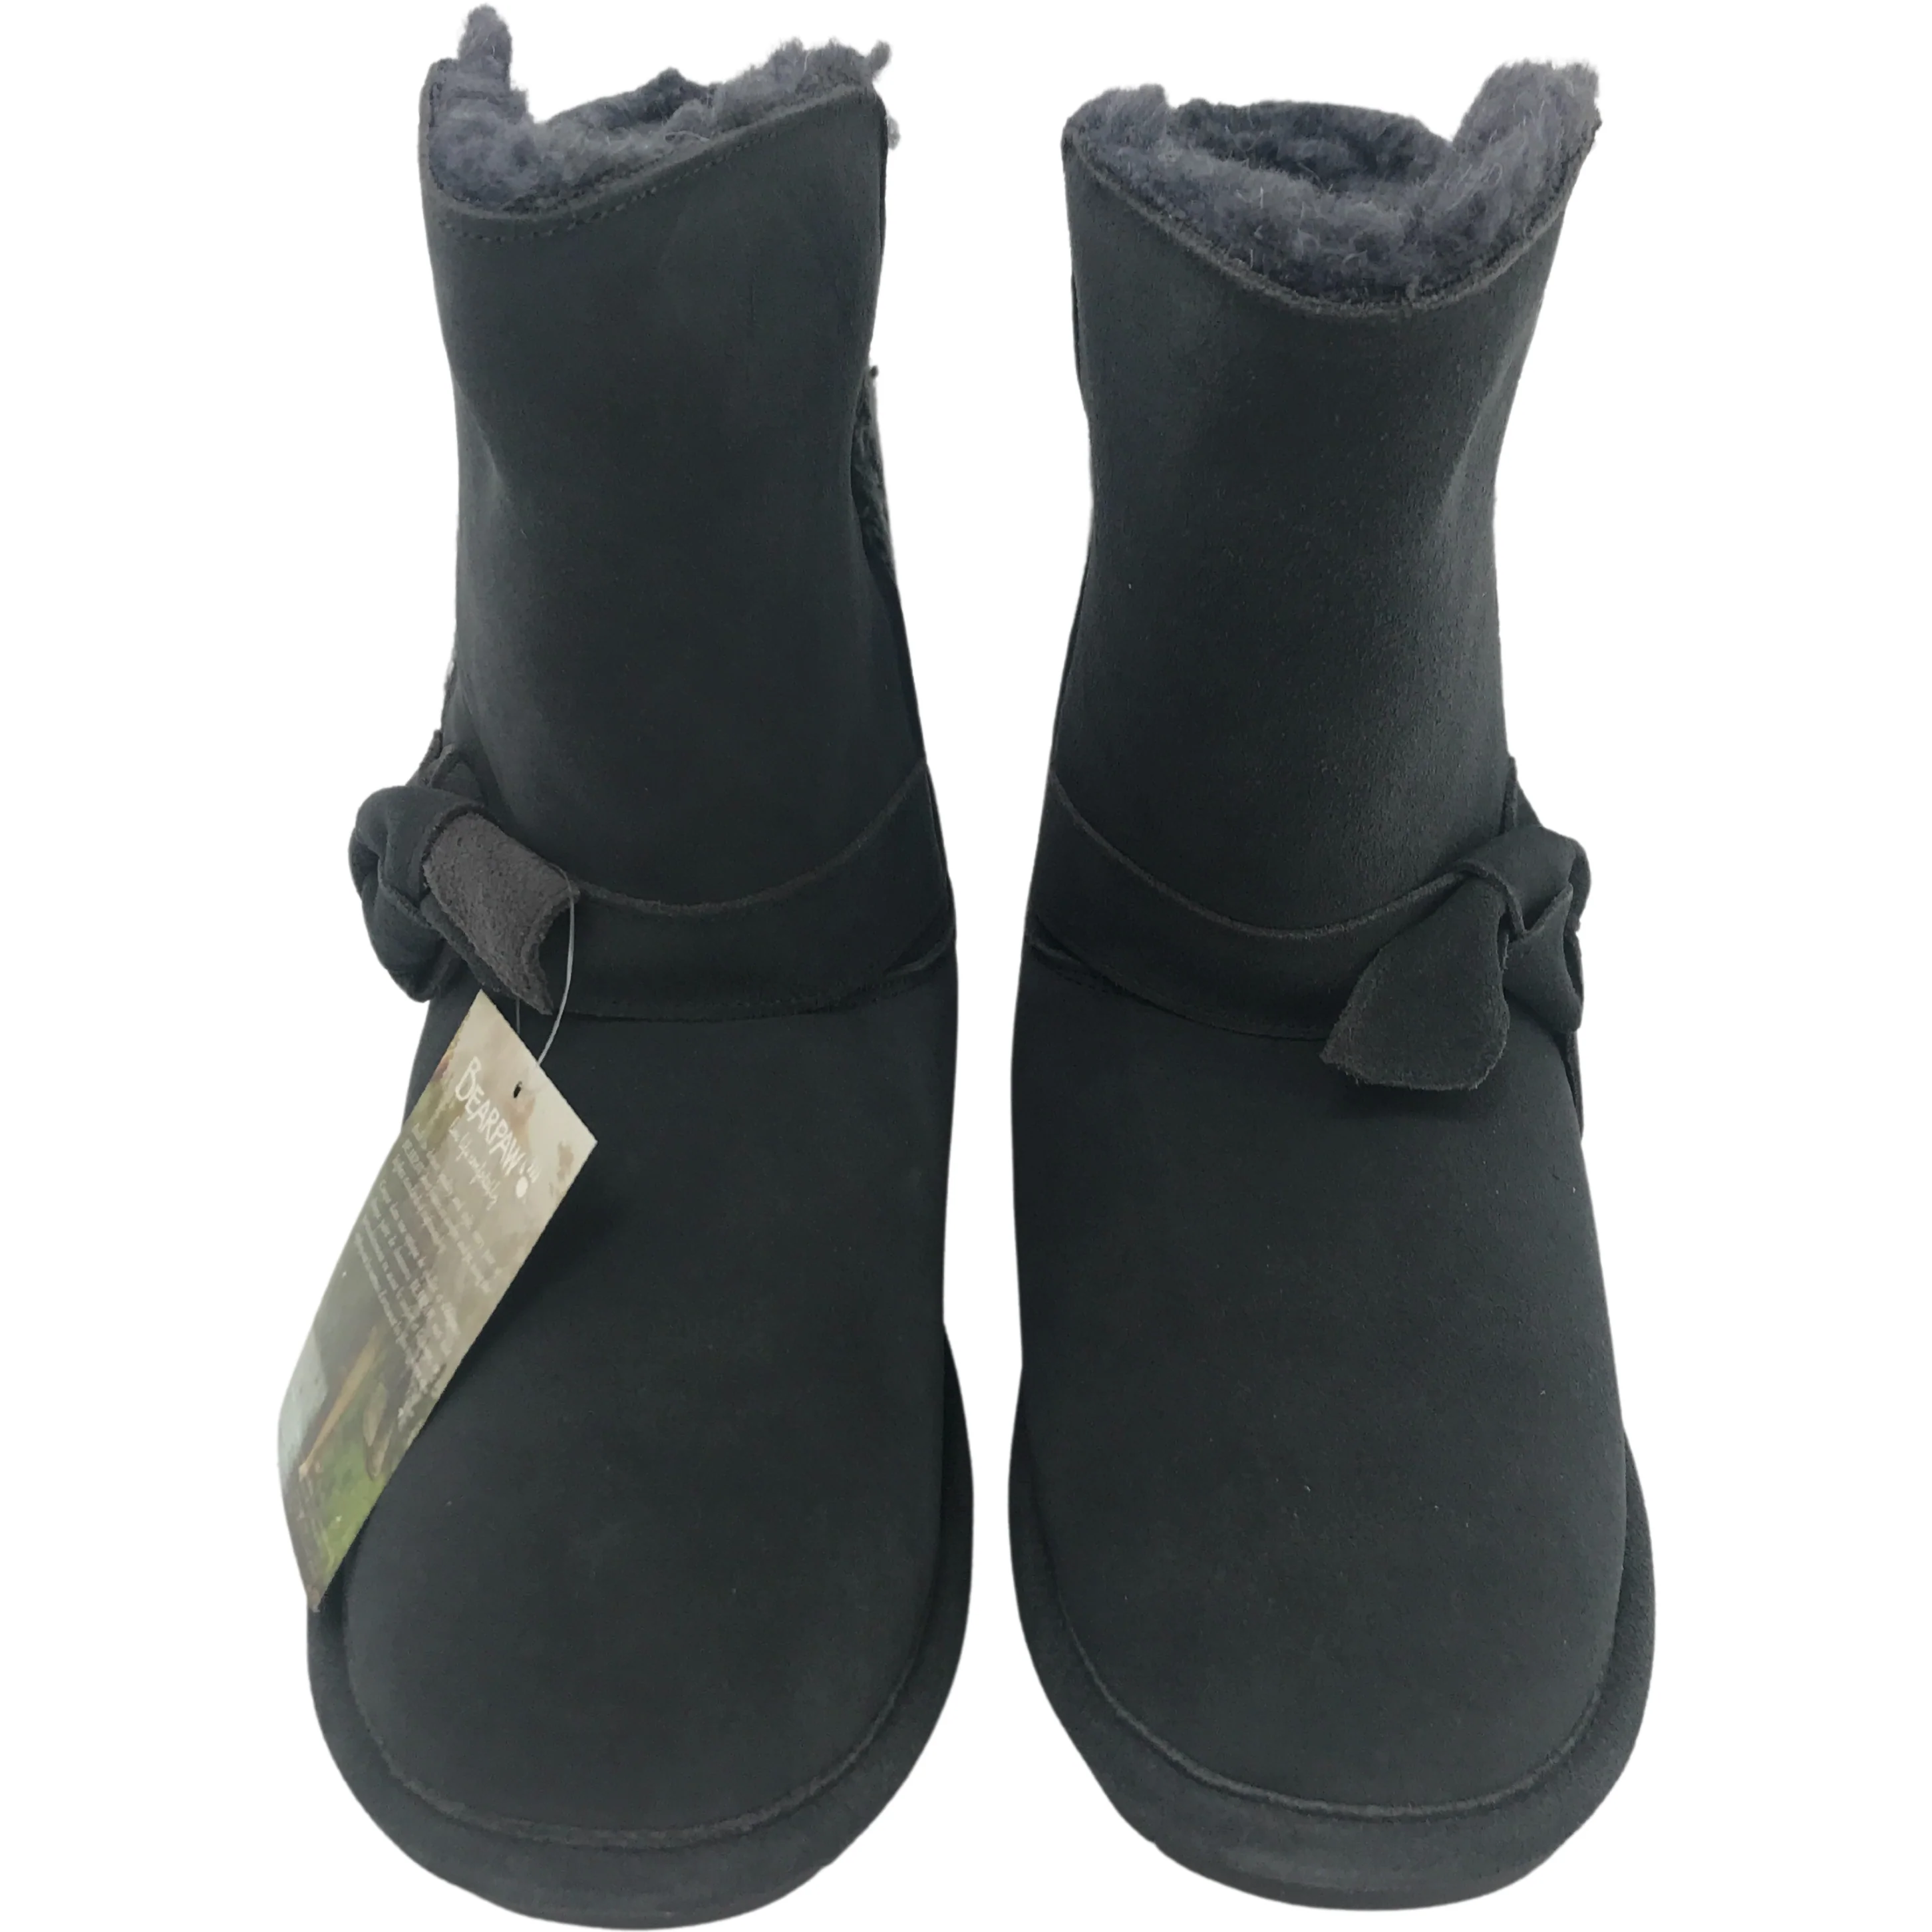 BearPaw Women's Winter Boots / Short Winter Boots / Geneva Knitted Boots / Grey / Size 10 **LIKE NEW*